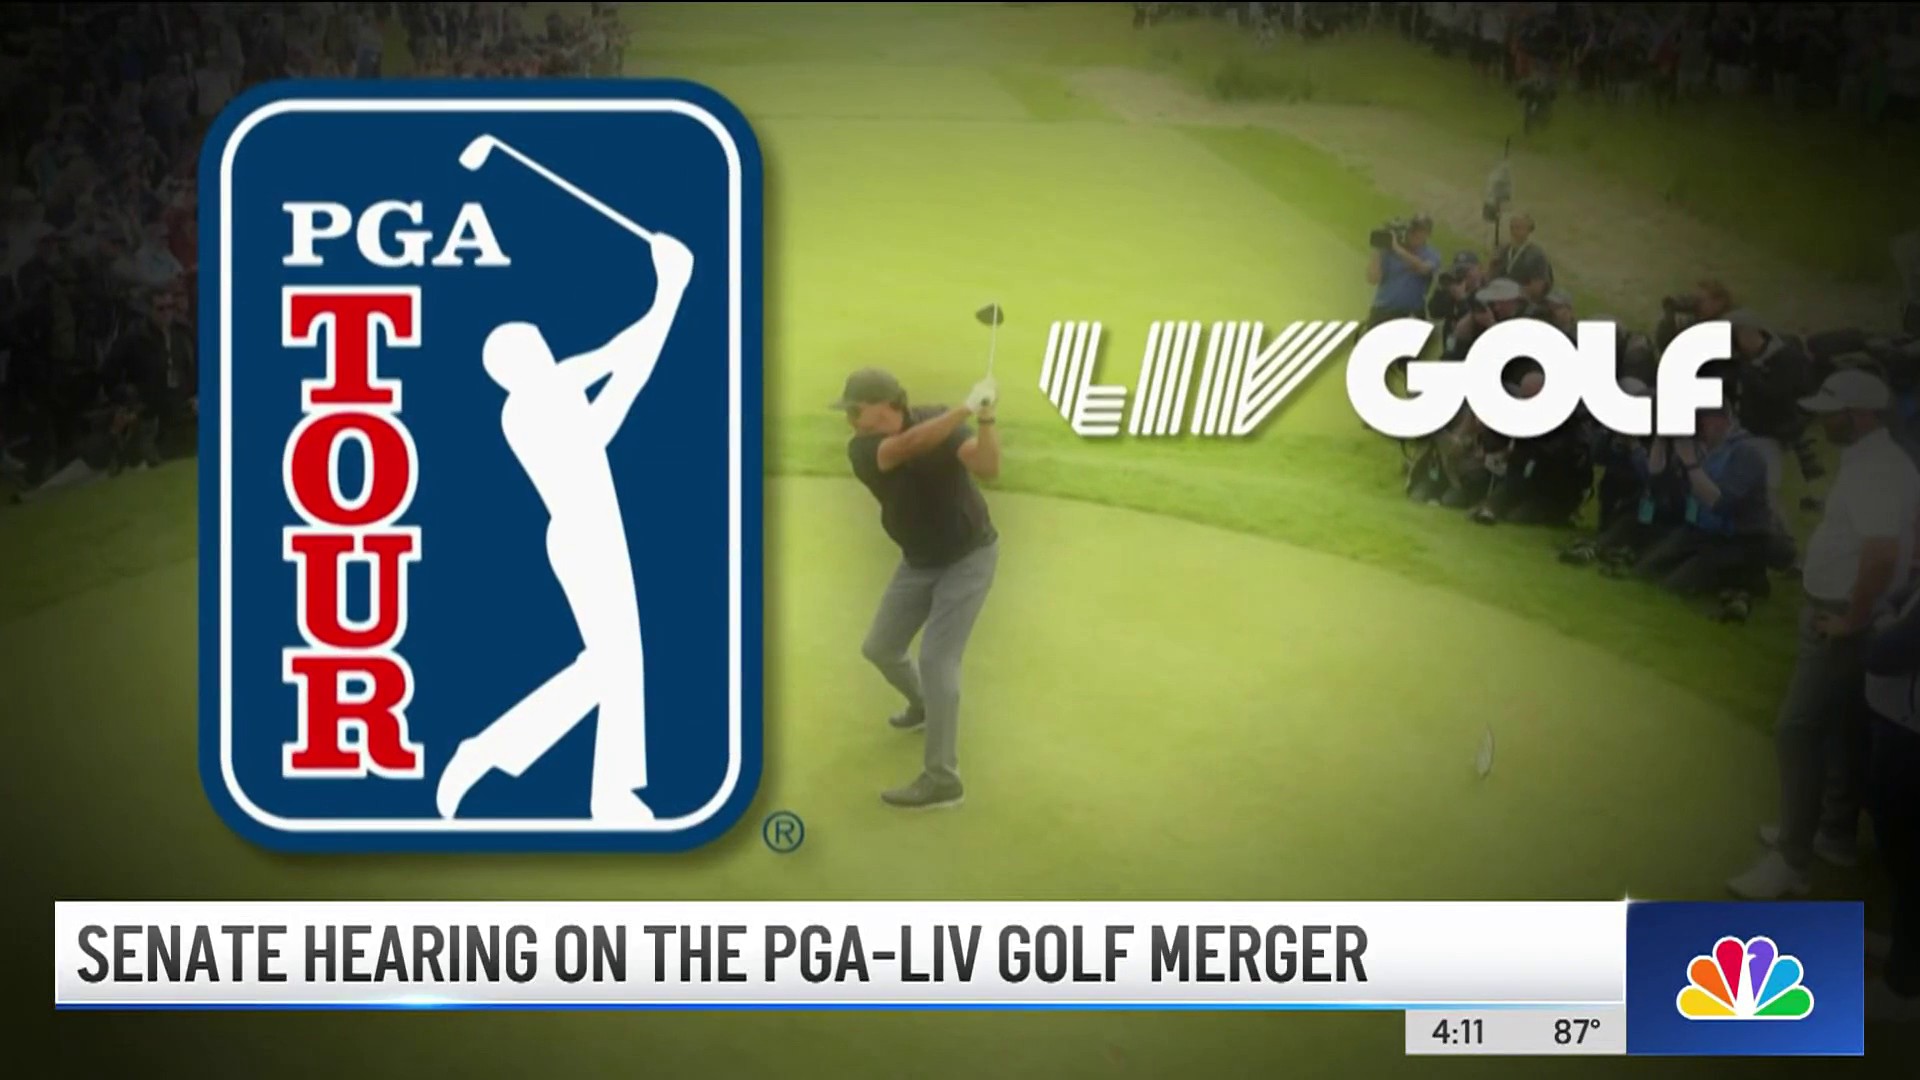 Senate hearing on the PGA-LIV Golf merger